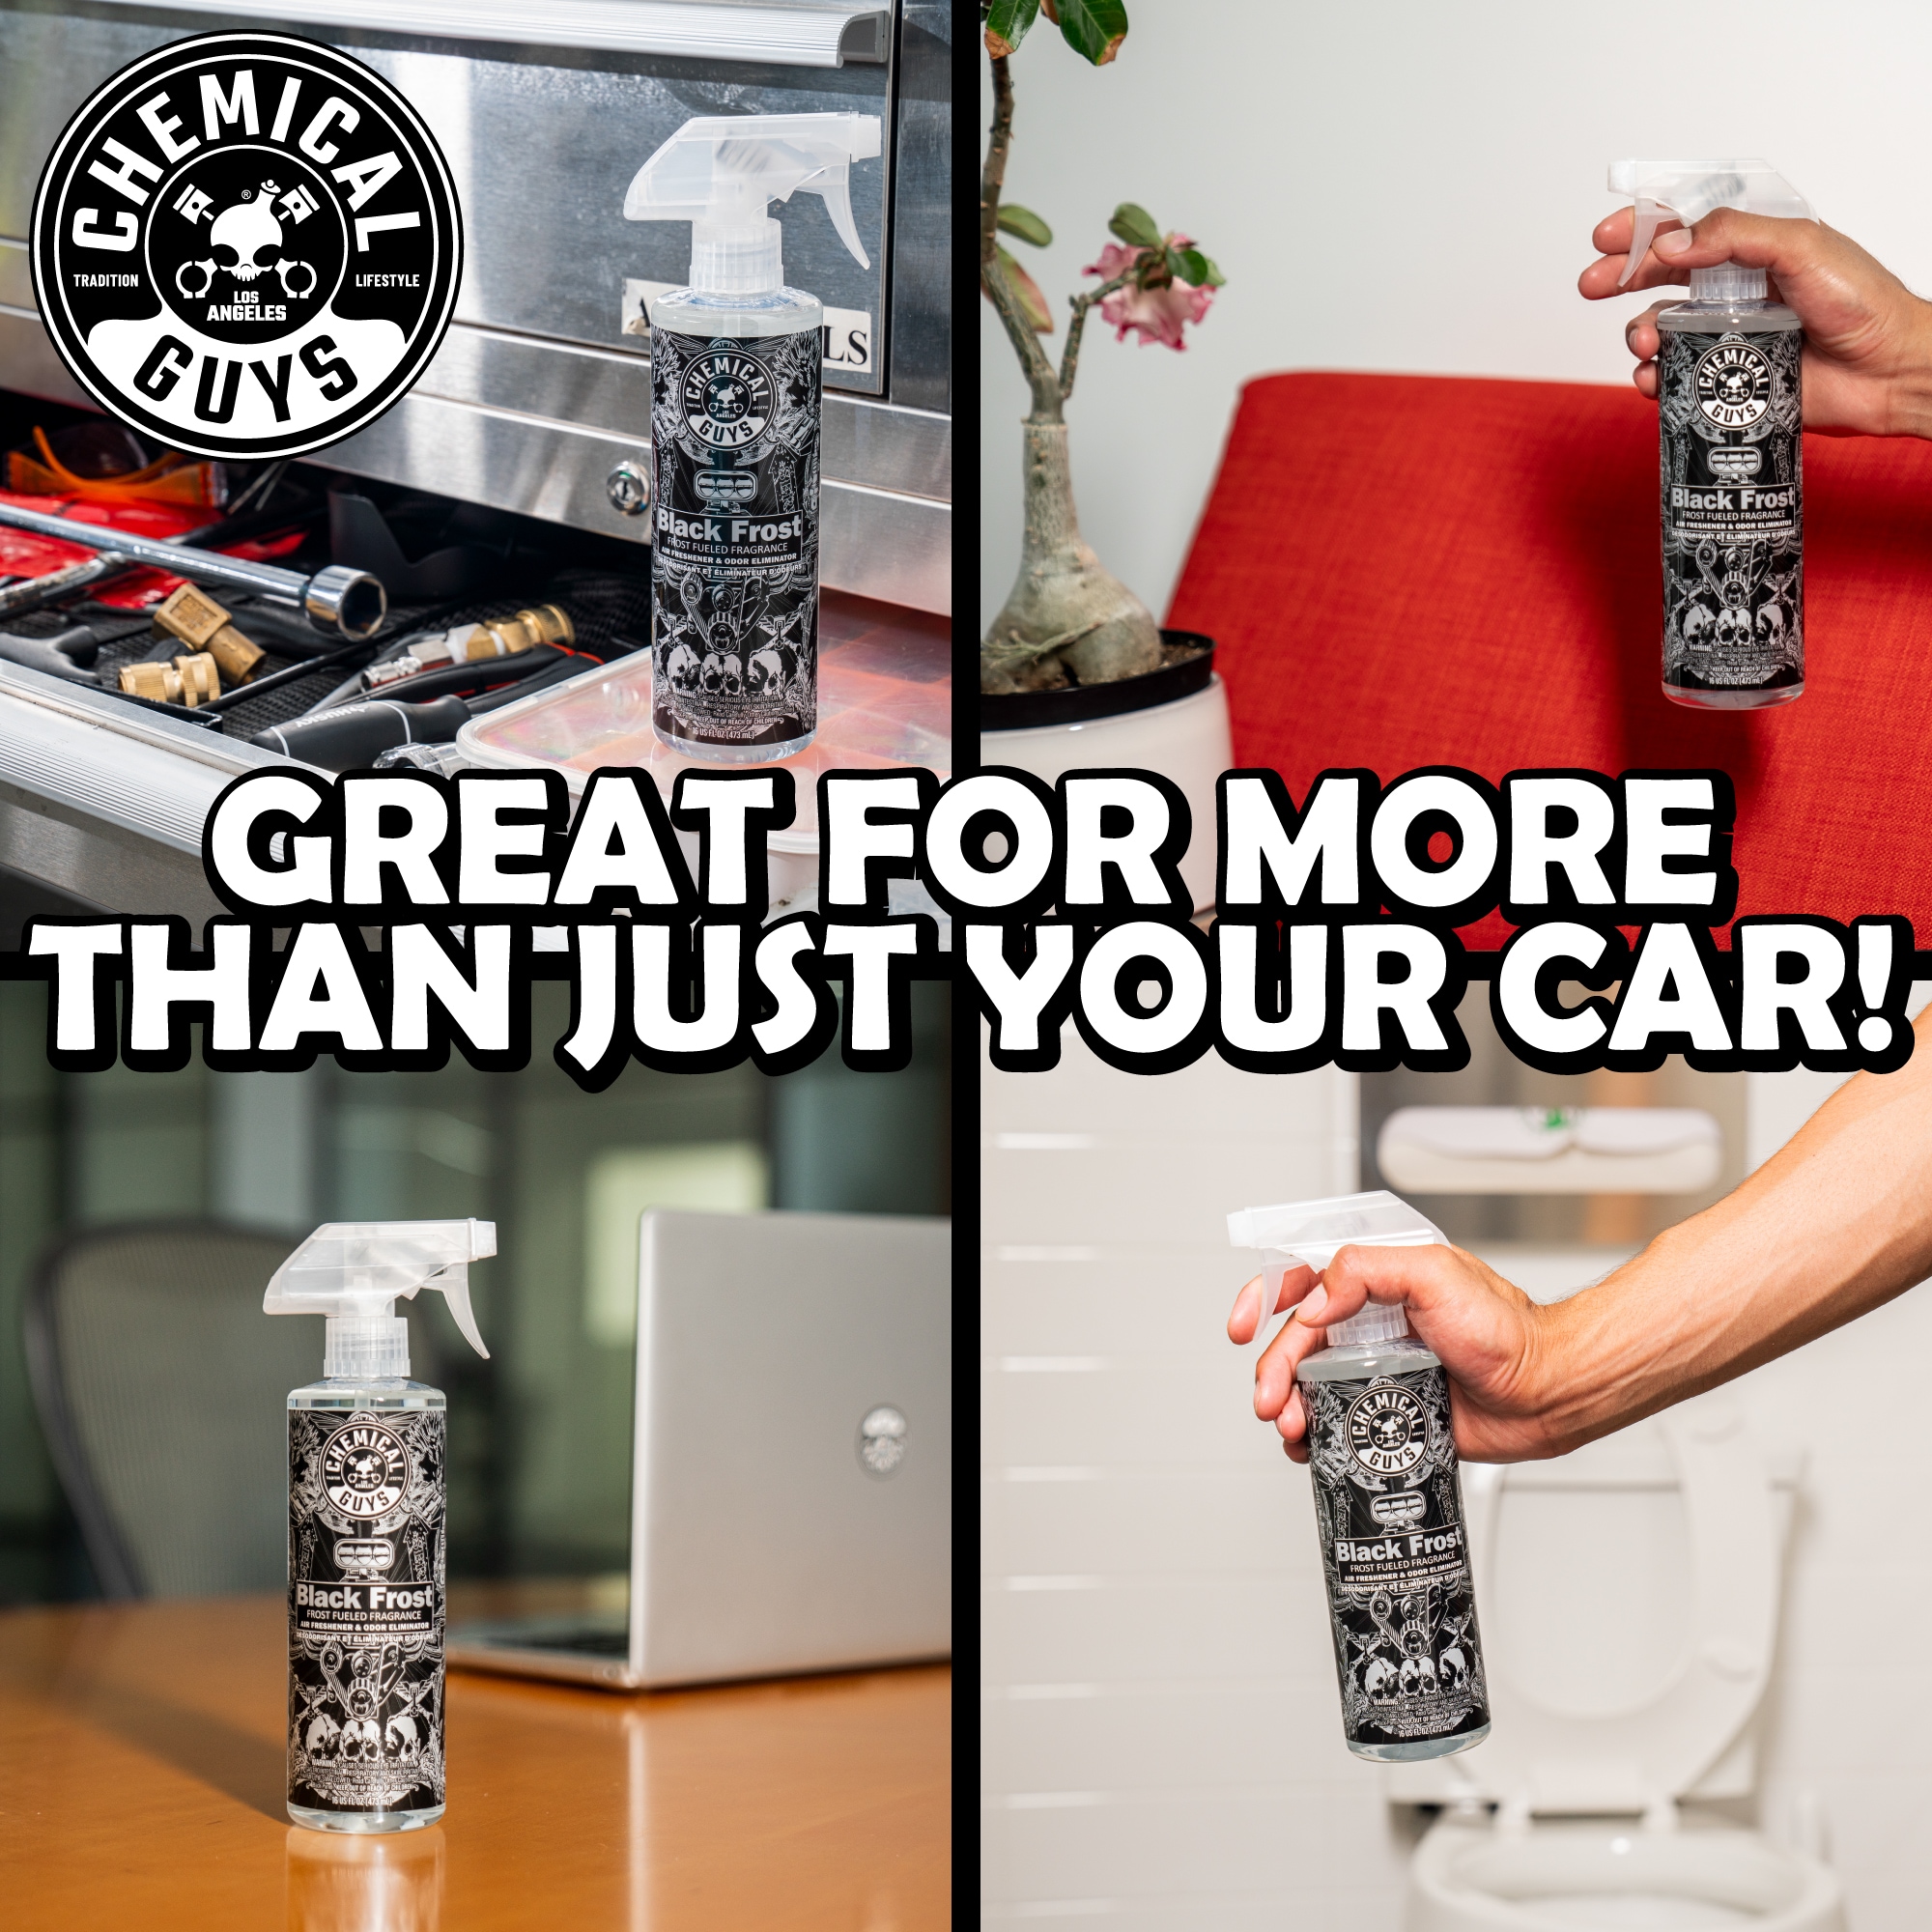 Chemical Guys 16-fl oz New Car Dispenser Air Freshener in the Air